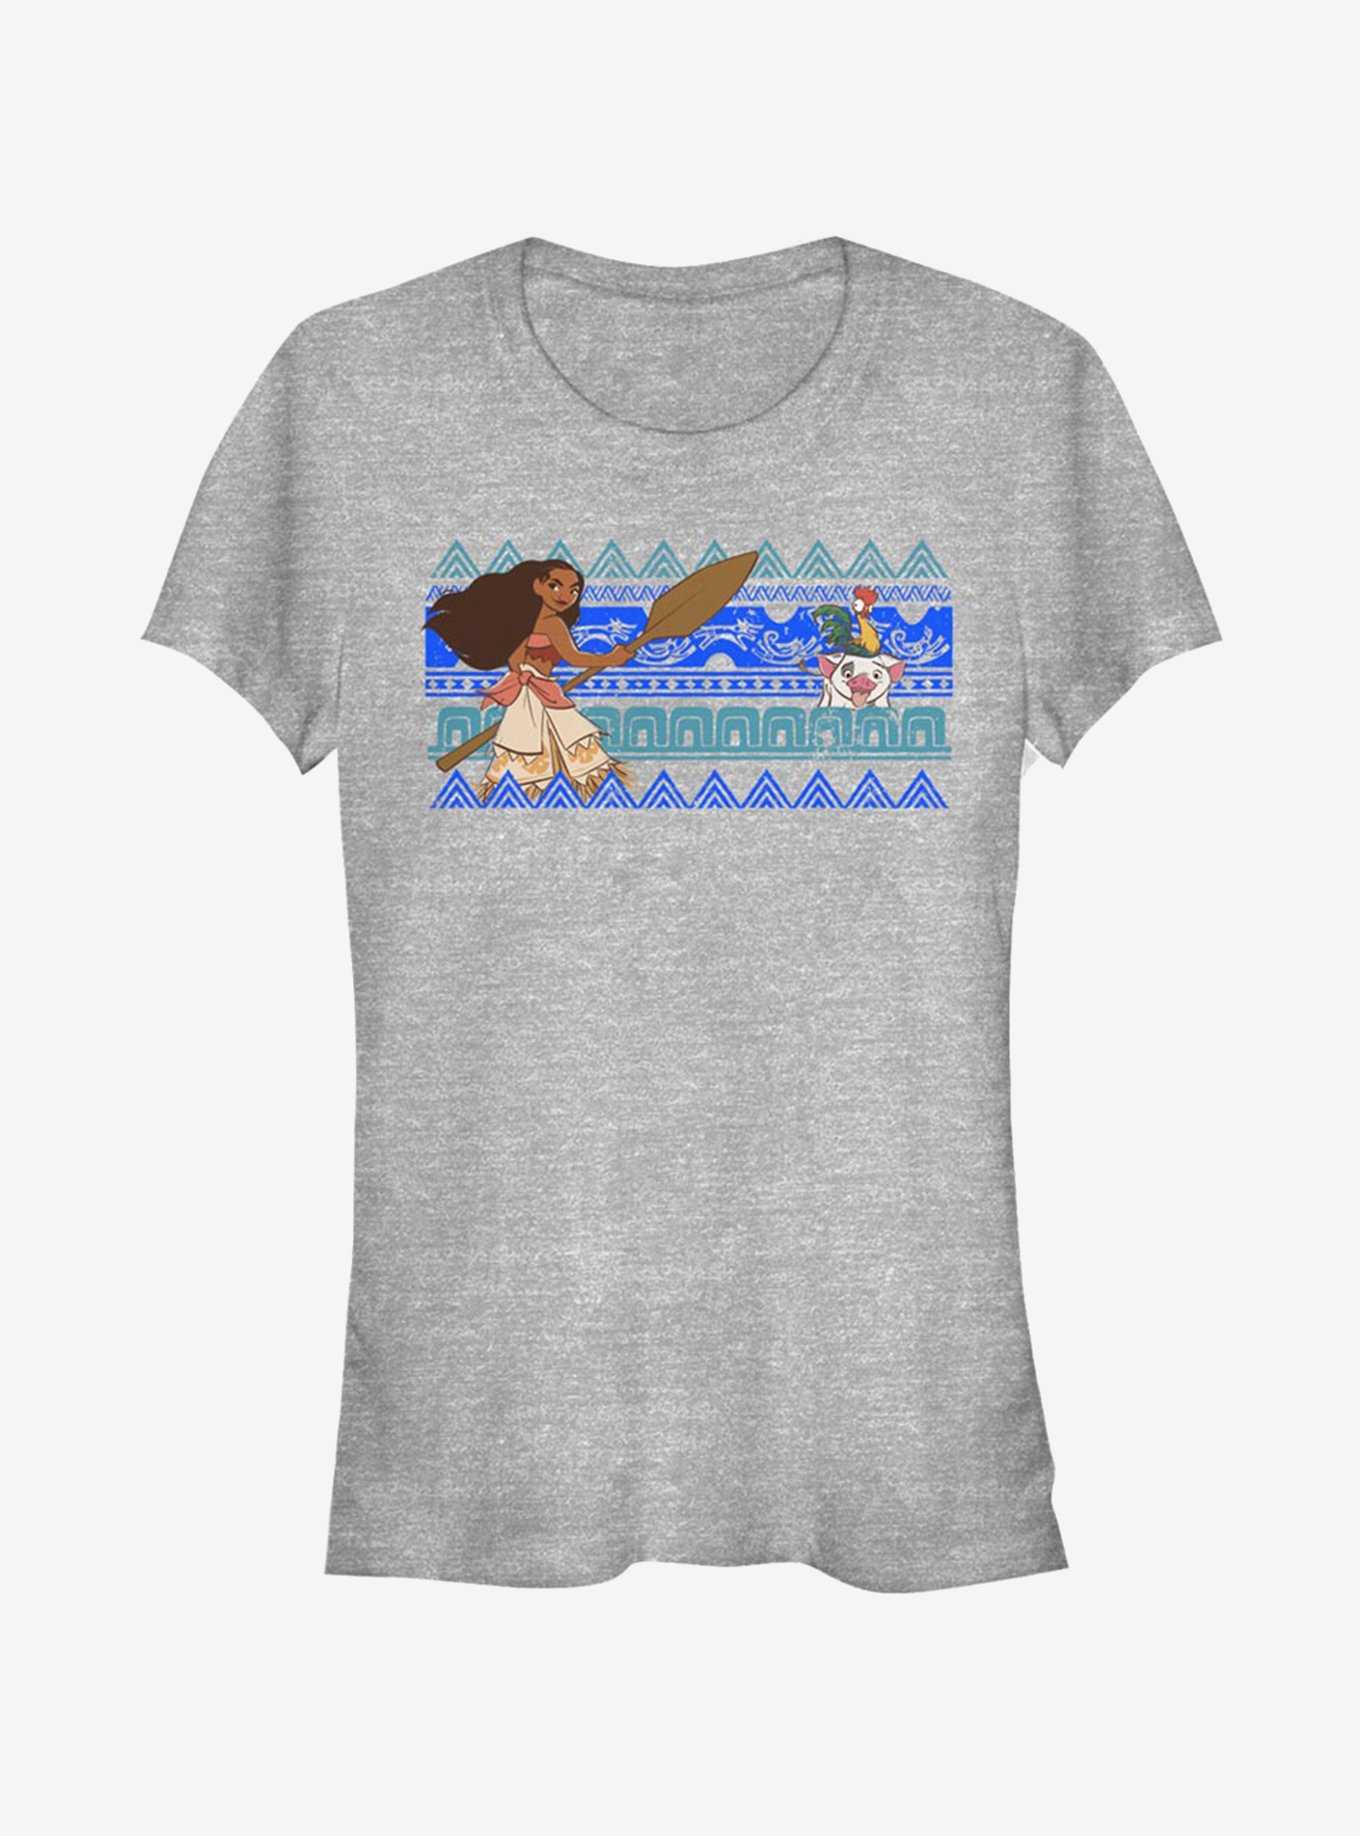 Disney Moana Pets Girls T-Shirt, , hi-res